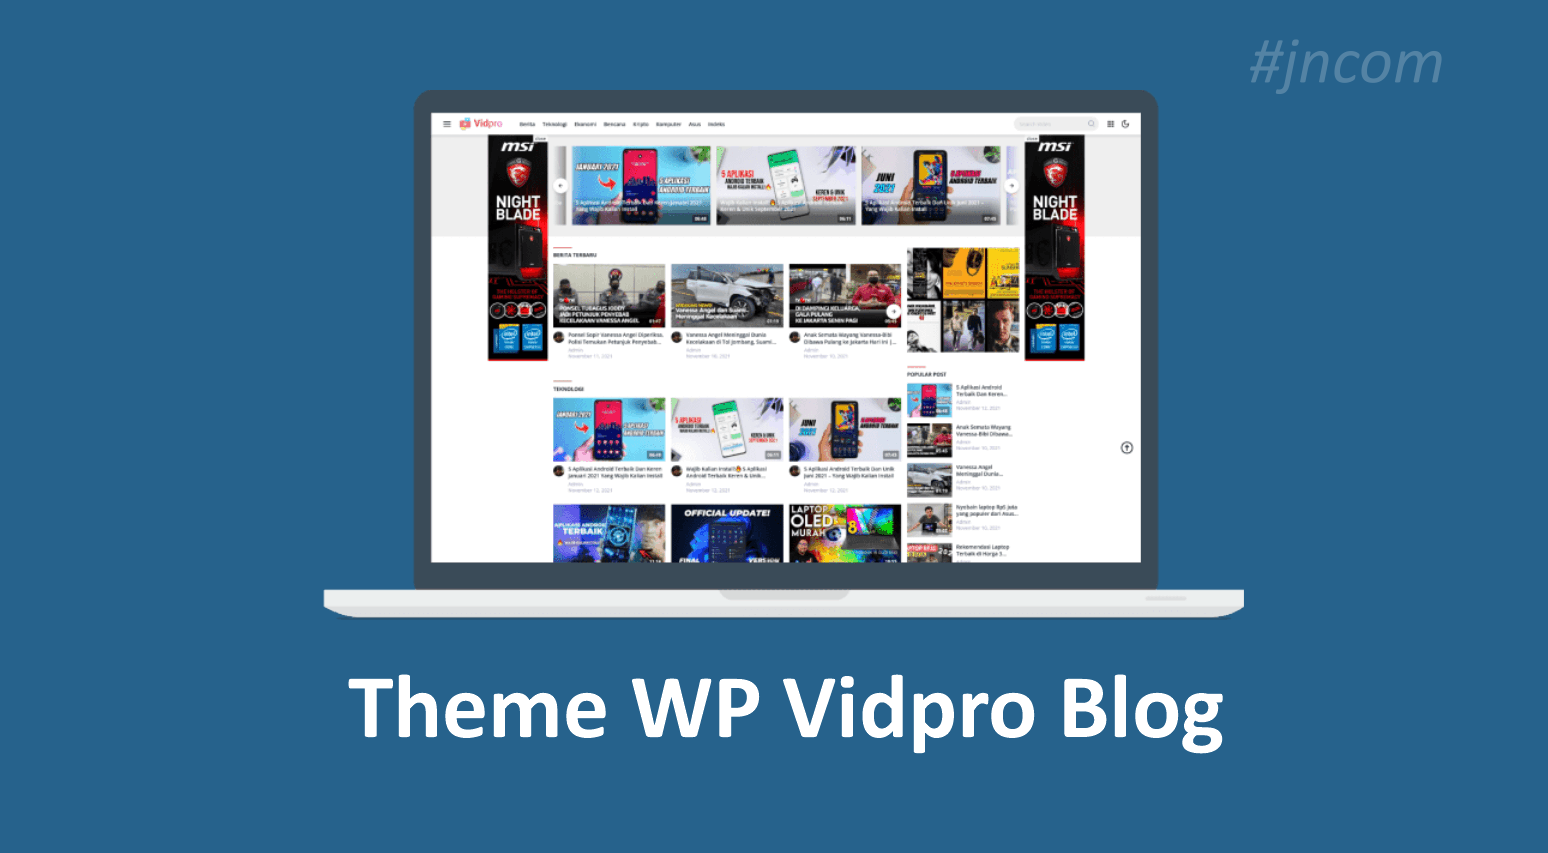 Vidpro WordPress Theme Video Blog